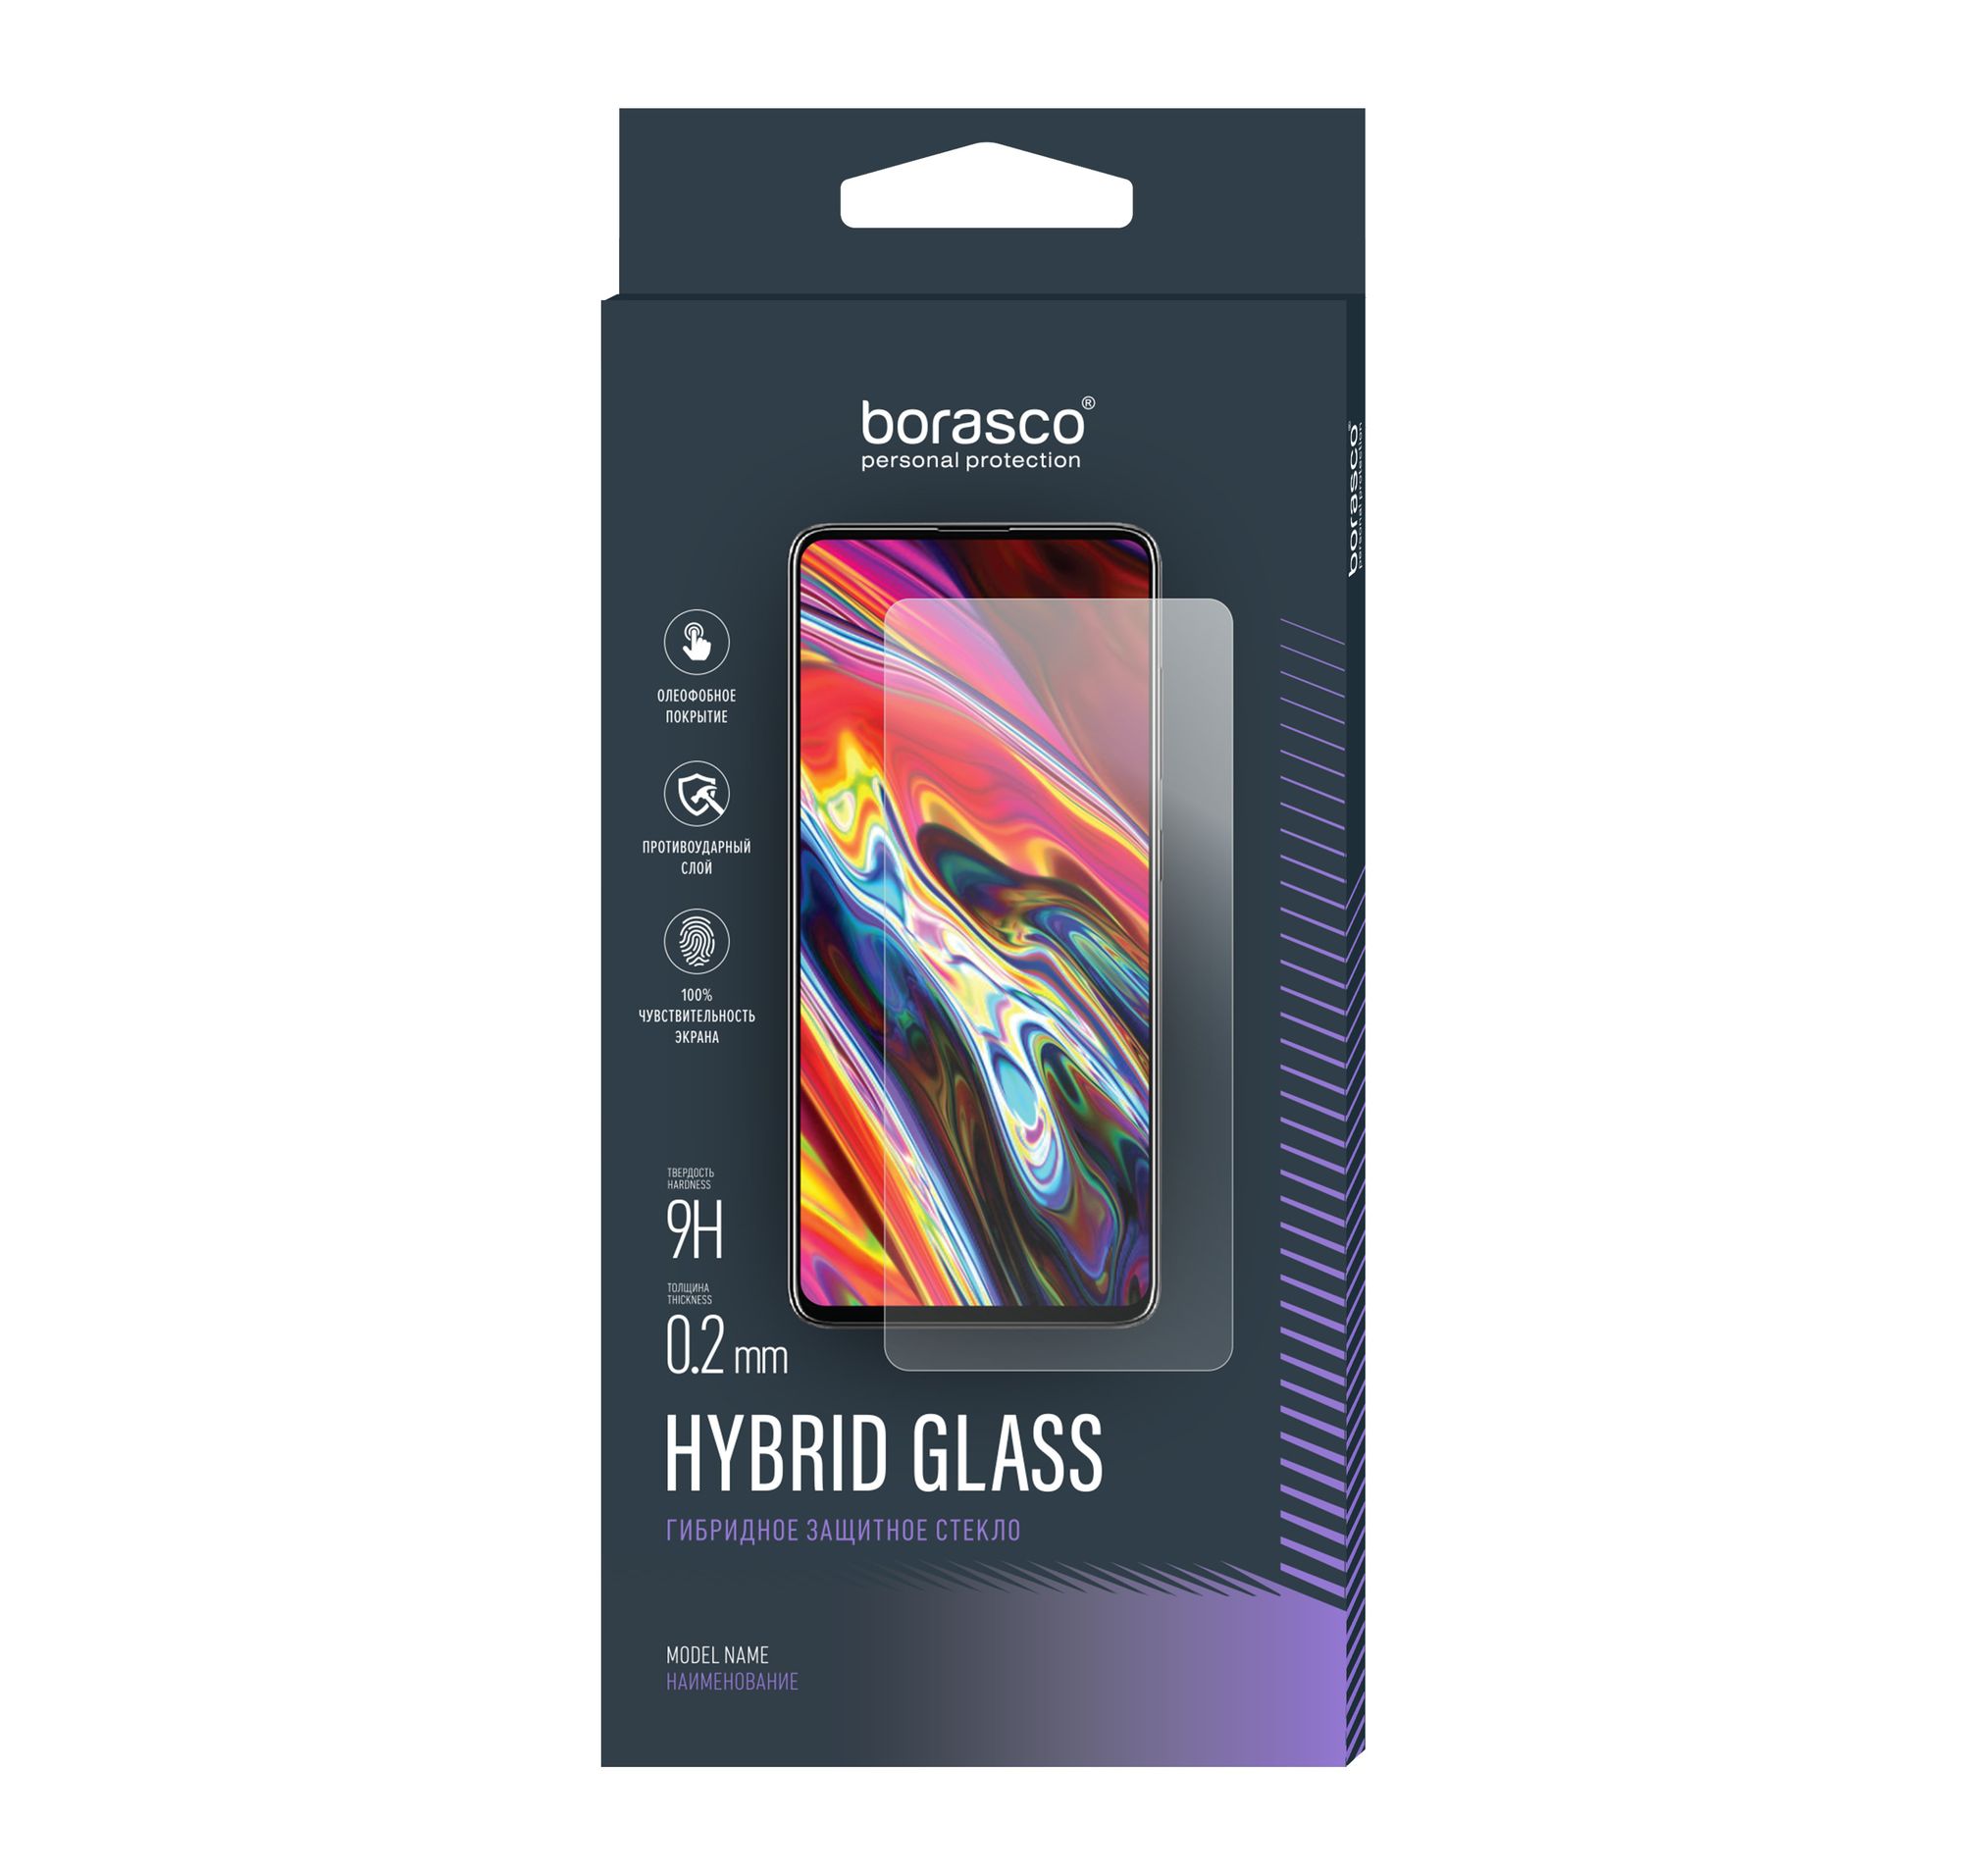 Стекло защитное Hybrid Glass VSP 0,26 мм для Samsung Galaxy J7 Neo стекло защитное hybrid glass vsp 0 26 мм для samsung galaxy j7 neo